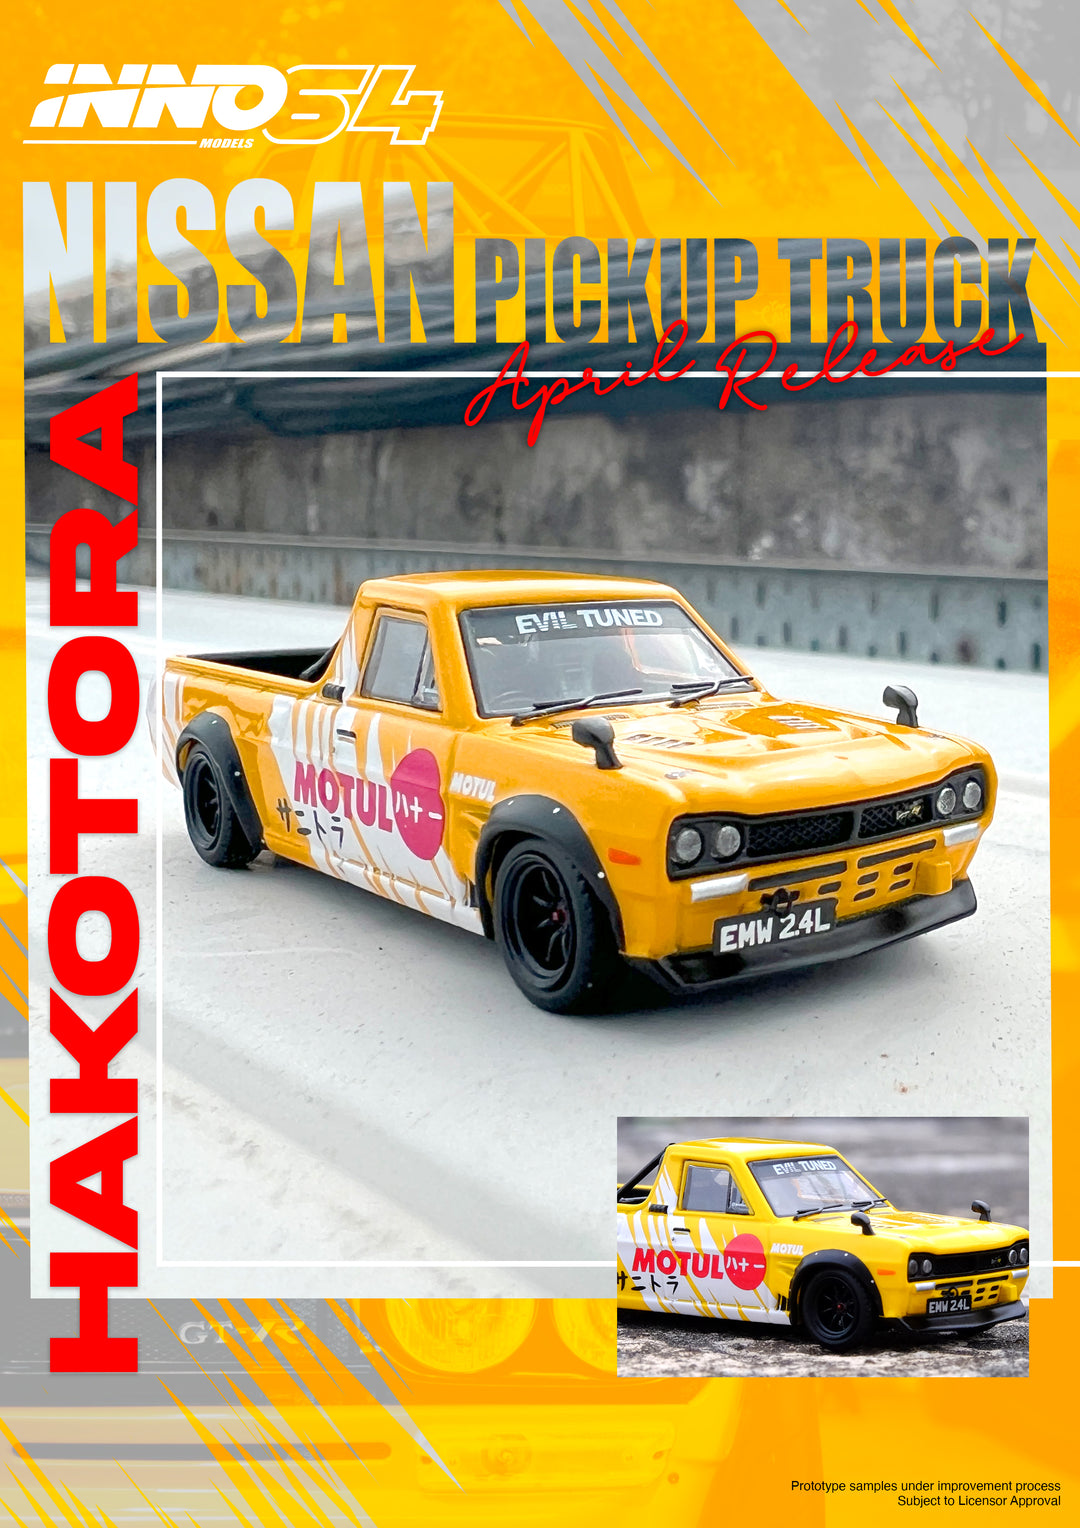 [Preorder] Inno64 1:64 Nissan Hakotora Pick Up Truck "MOTUL" Livery